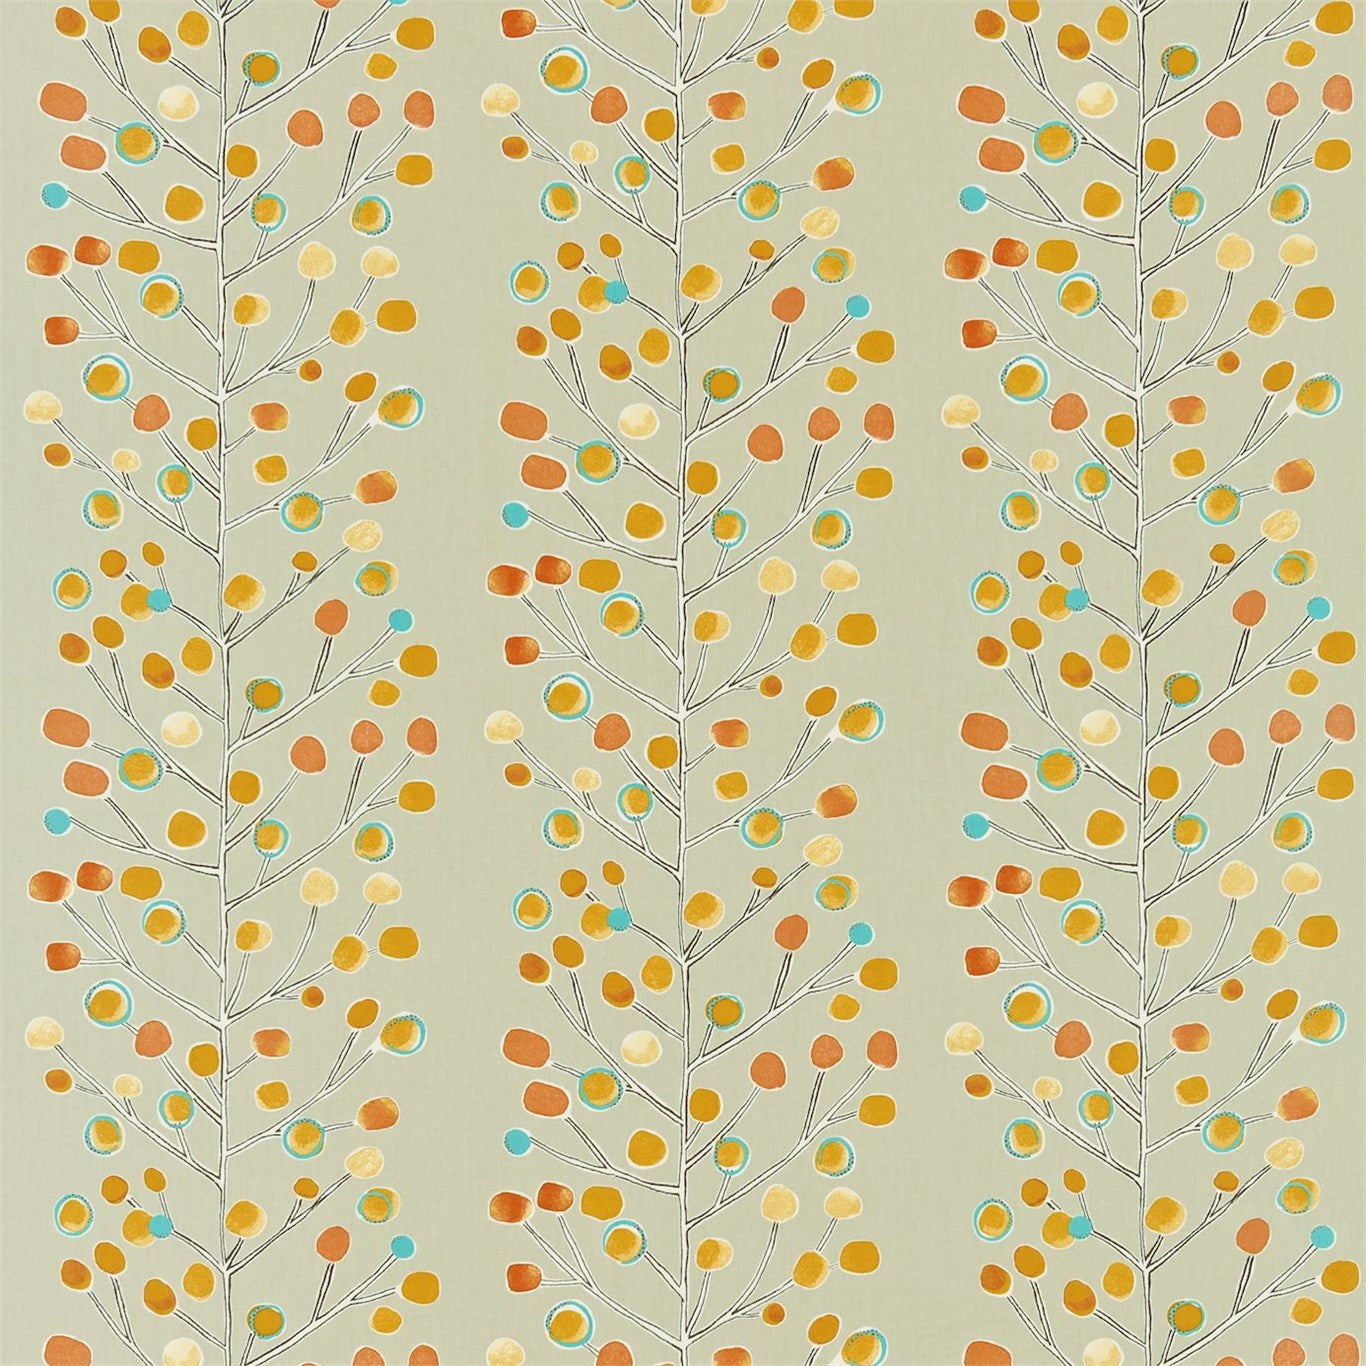 Berry Tree Fabric by Scion - NMEL120052 - Neutral Tangerine Powder Blue And Lemon